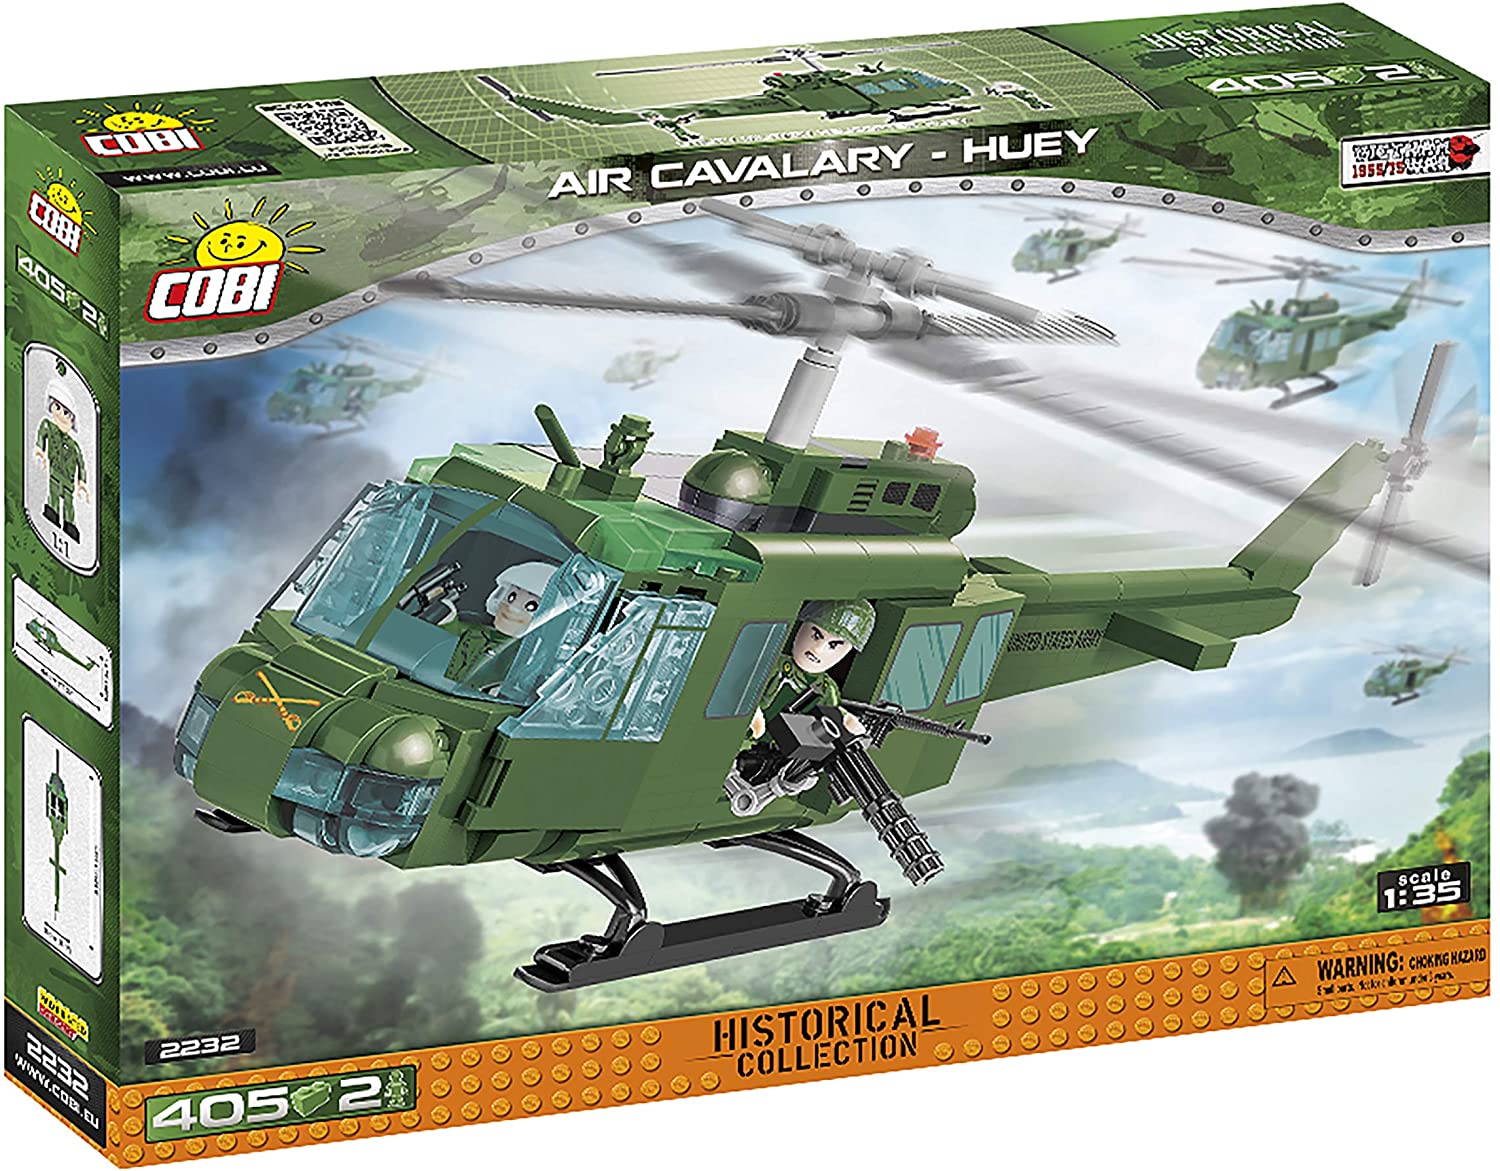 Small Army Vietnam Air Calvalry - HUEY